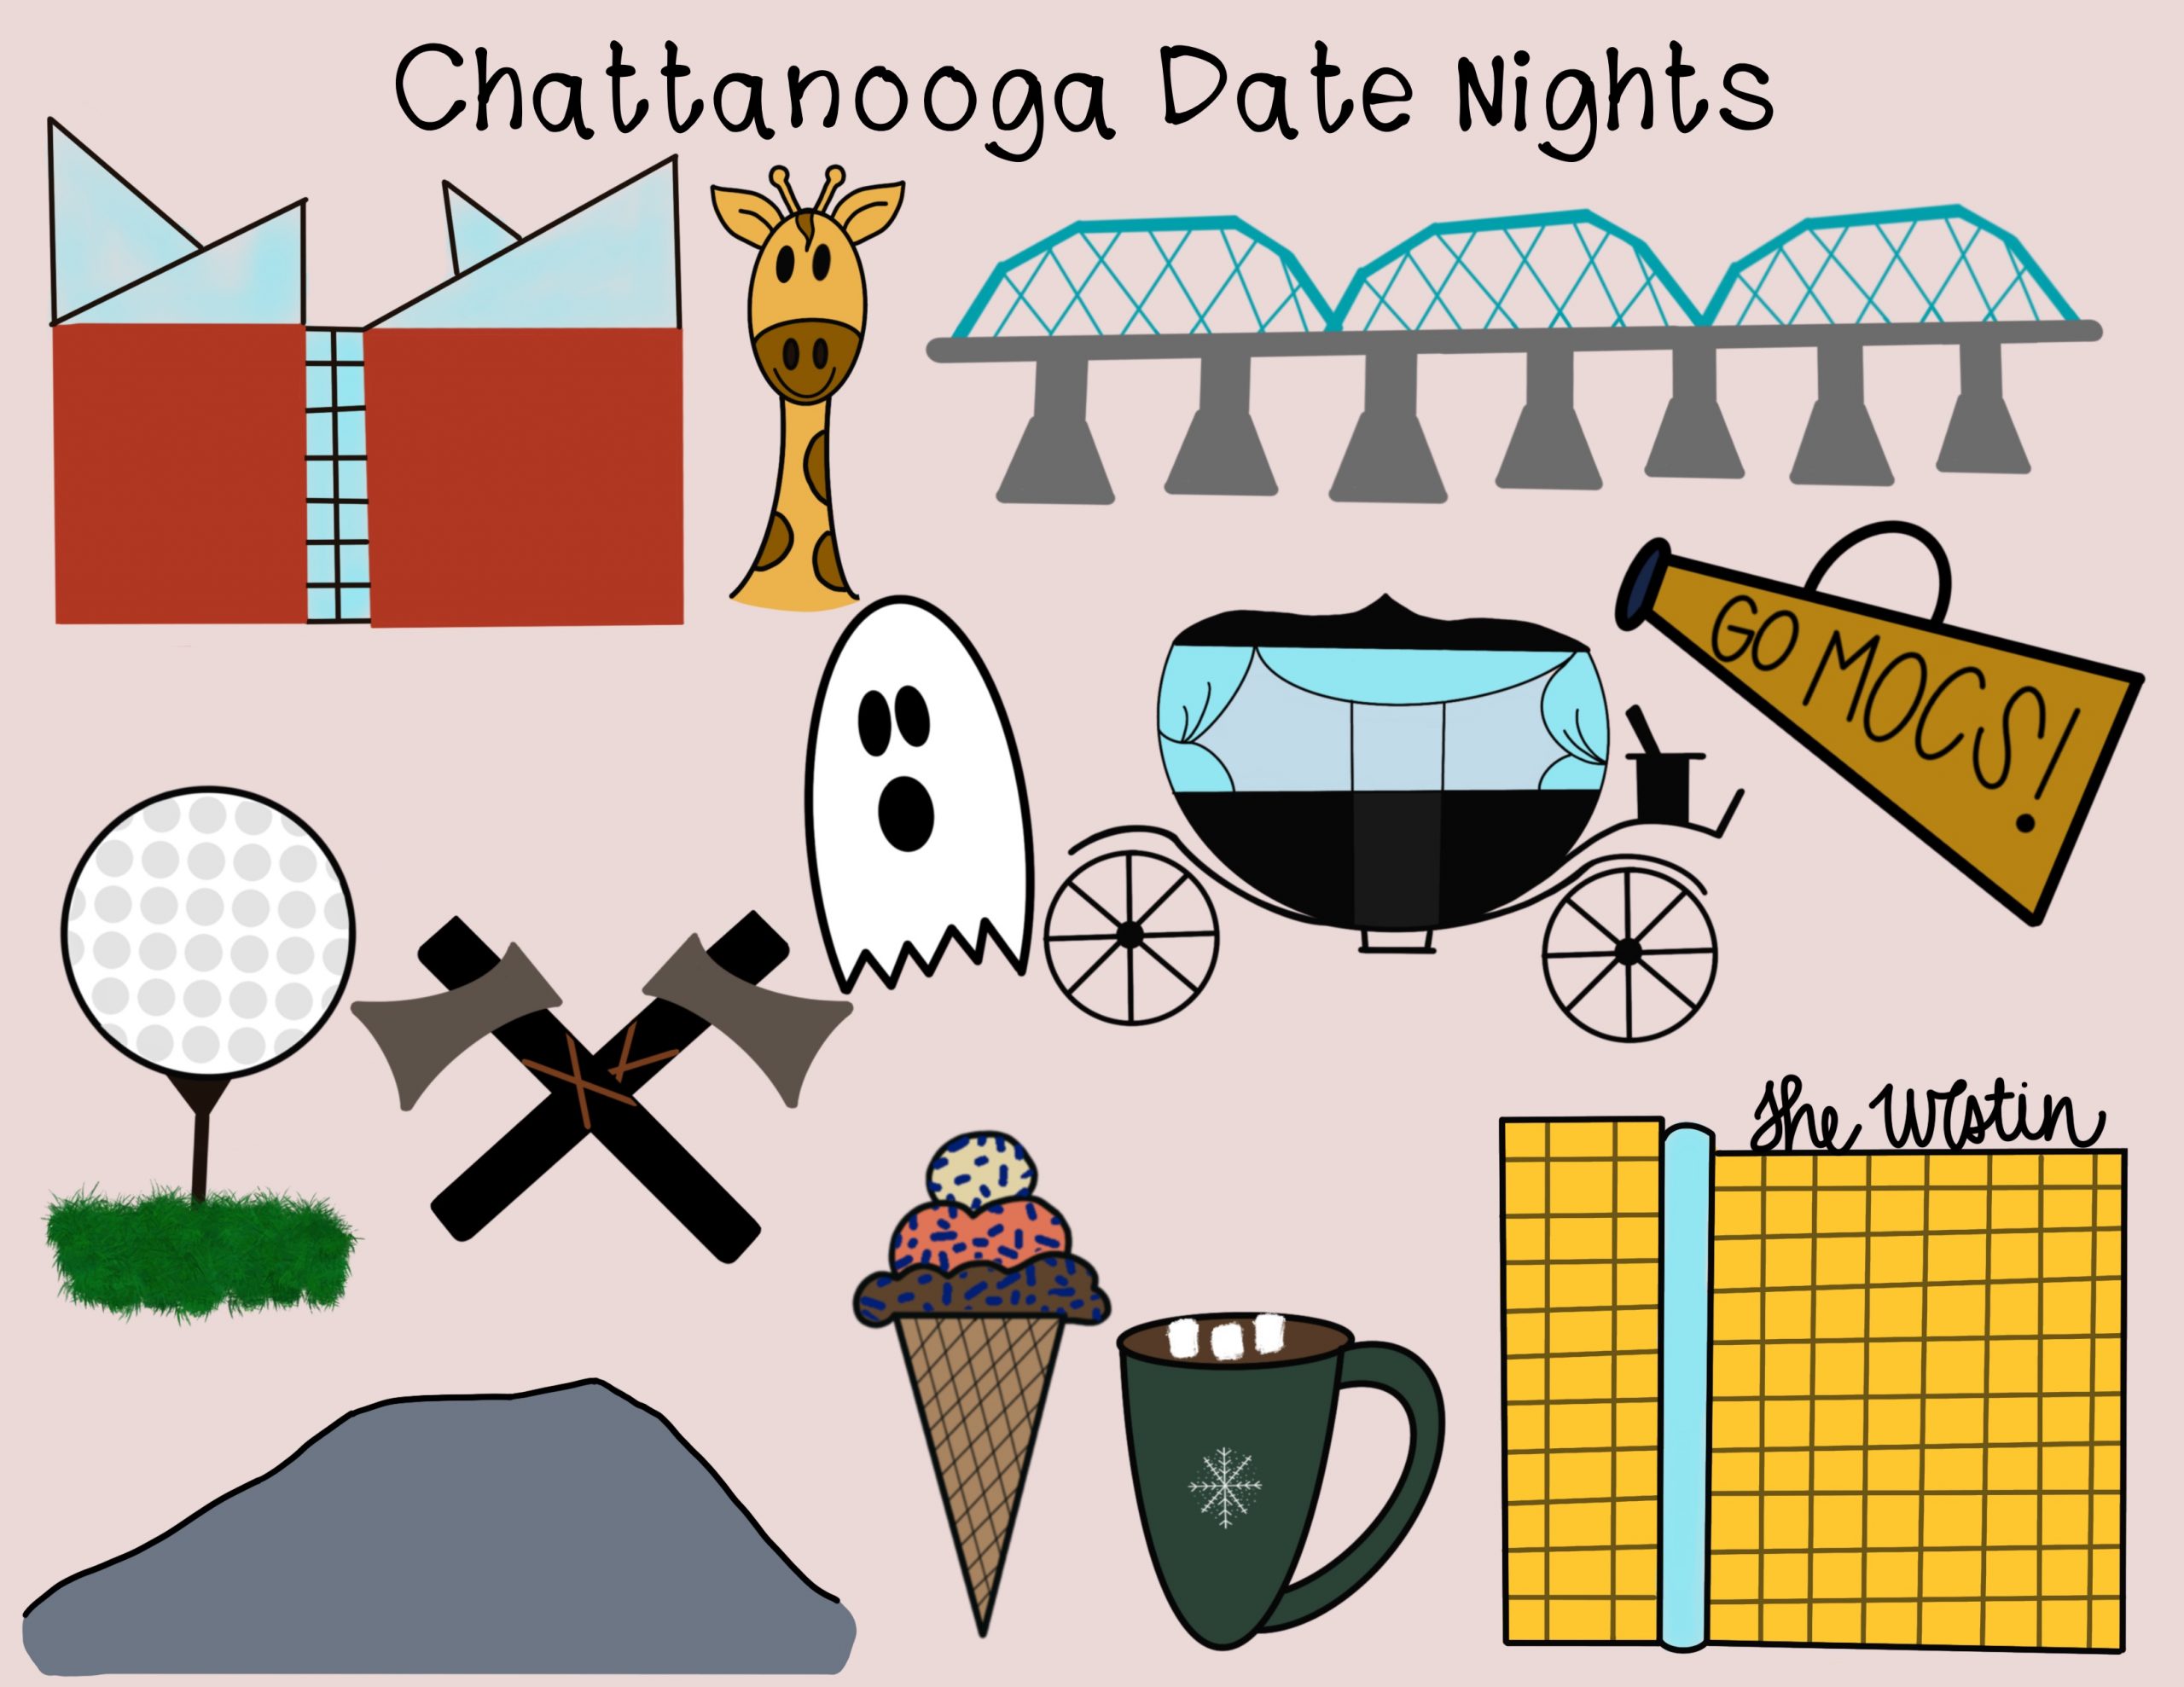 Chattanooga Date Nights